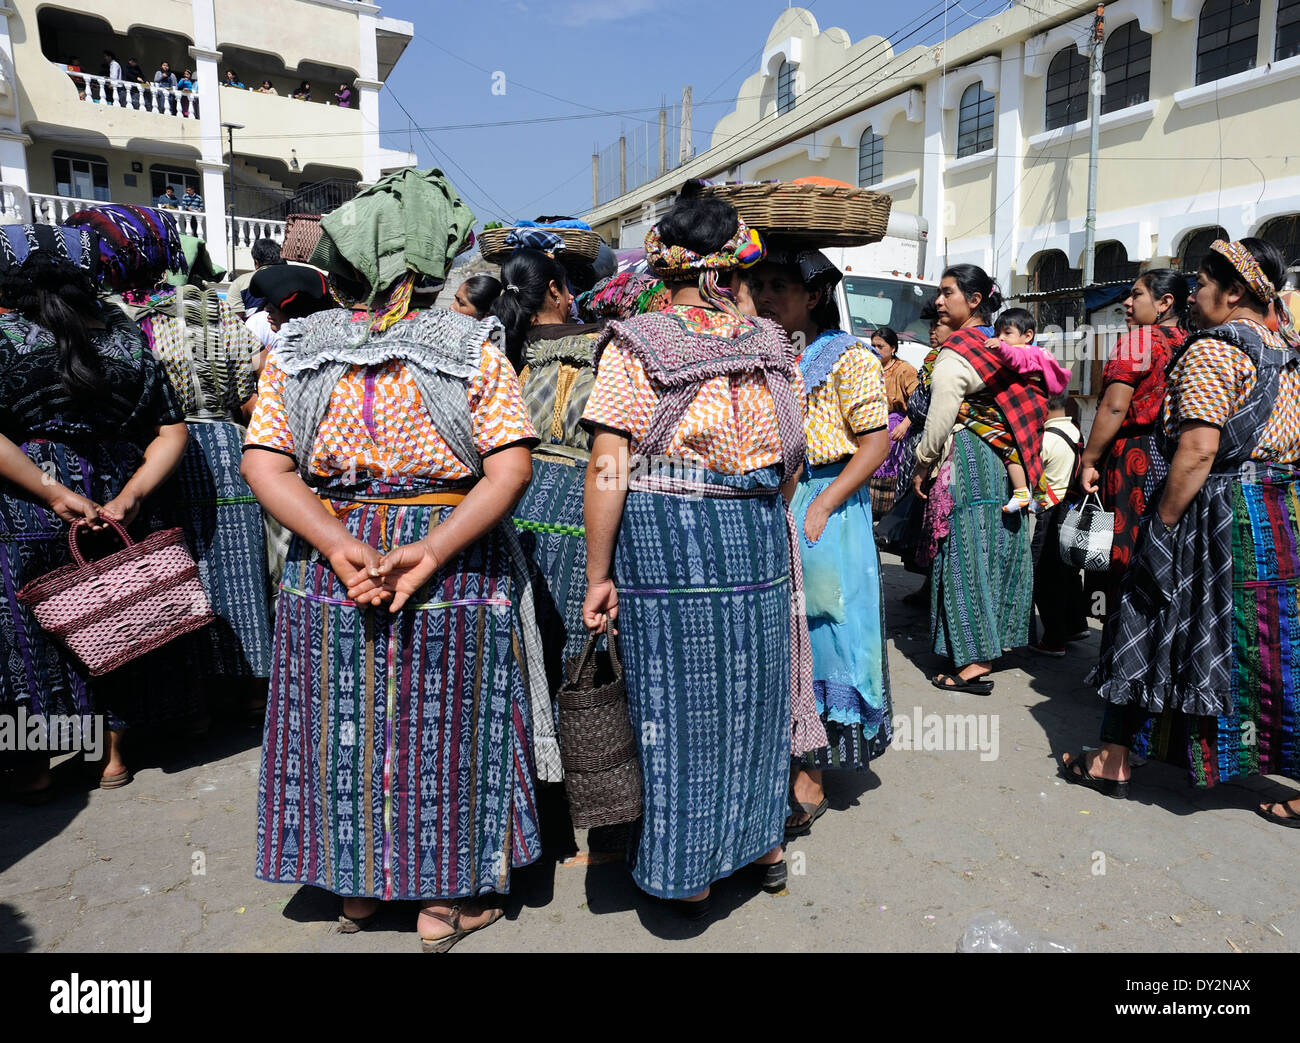 Women awaiting transport at the fruit and vegetable market at Almolonga. San Pedro de Almolonga, Republic of Guatemala. Stock Photo